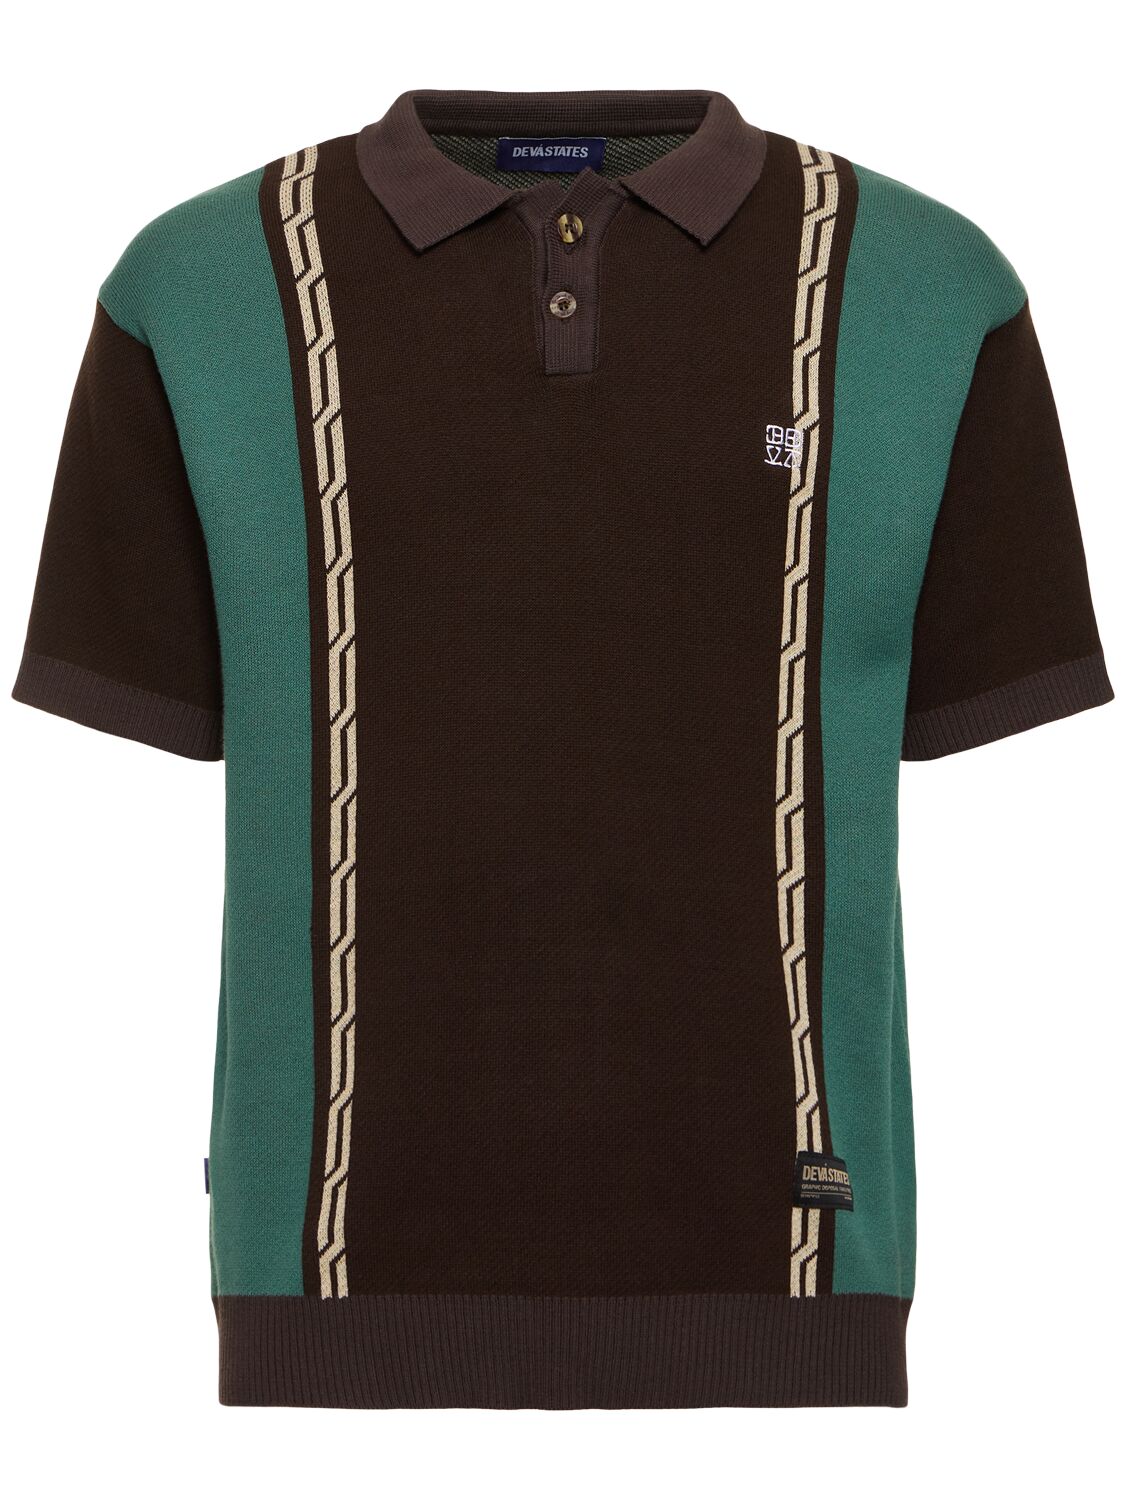 Deva States Chain Jacquard Knit S/s Polo Shirt In Brown,multi